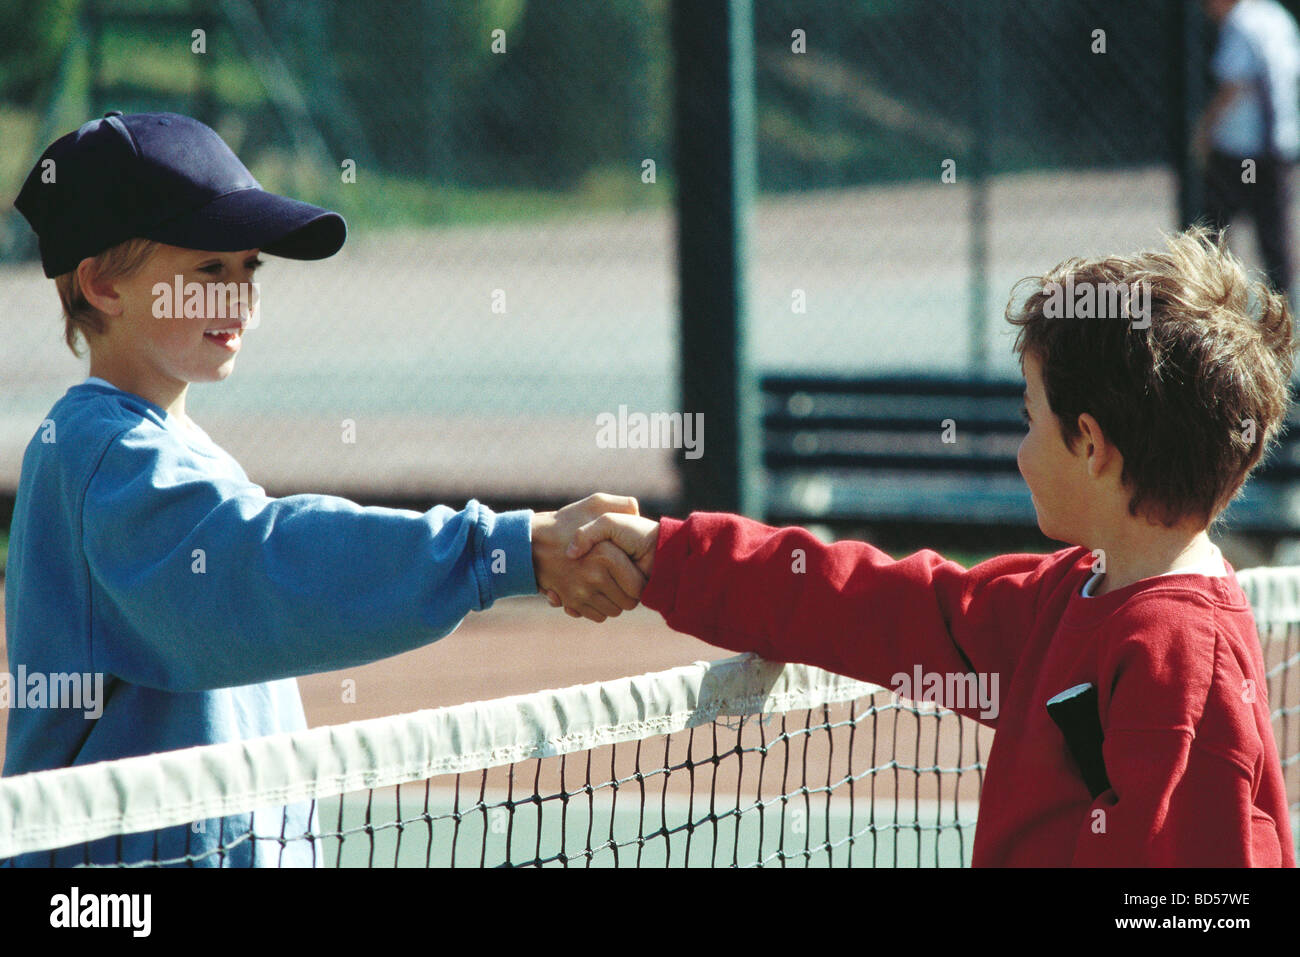 Girls shaking hands at net on tennis court Stock Photo